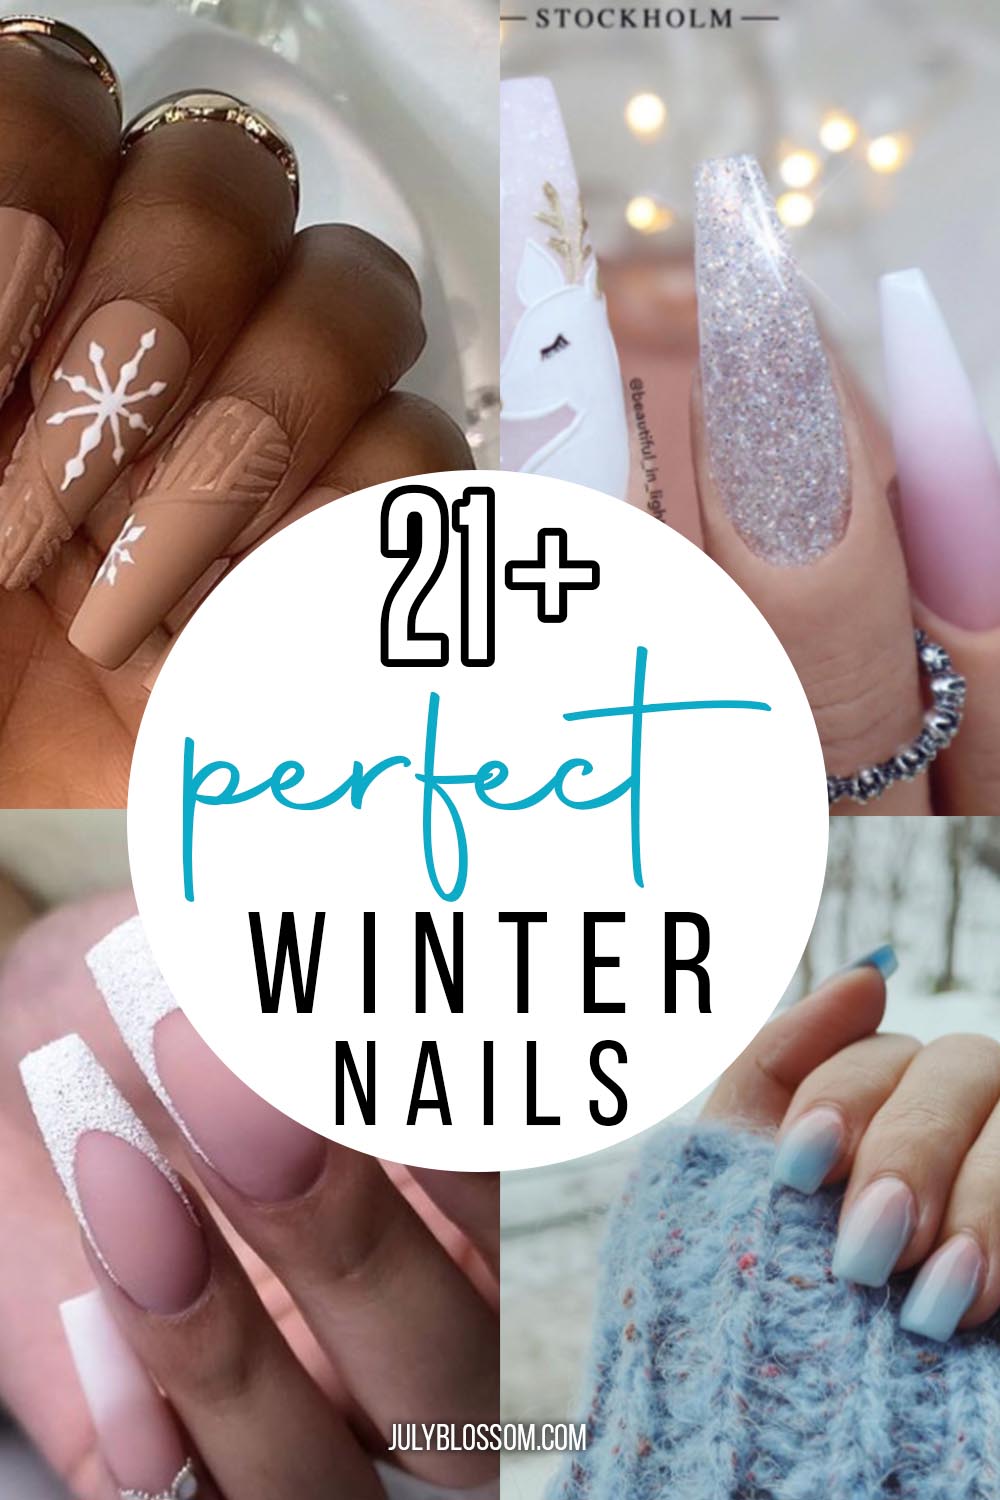 21+ Perfect Winter Nail Designs 2021 - ♡ July Blossom